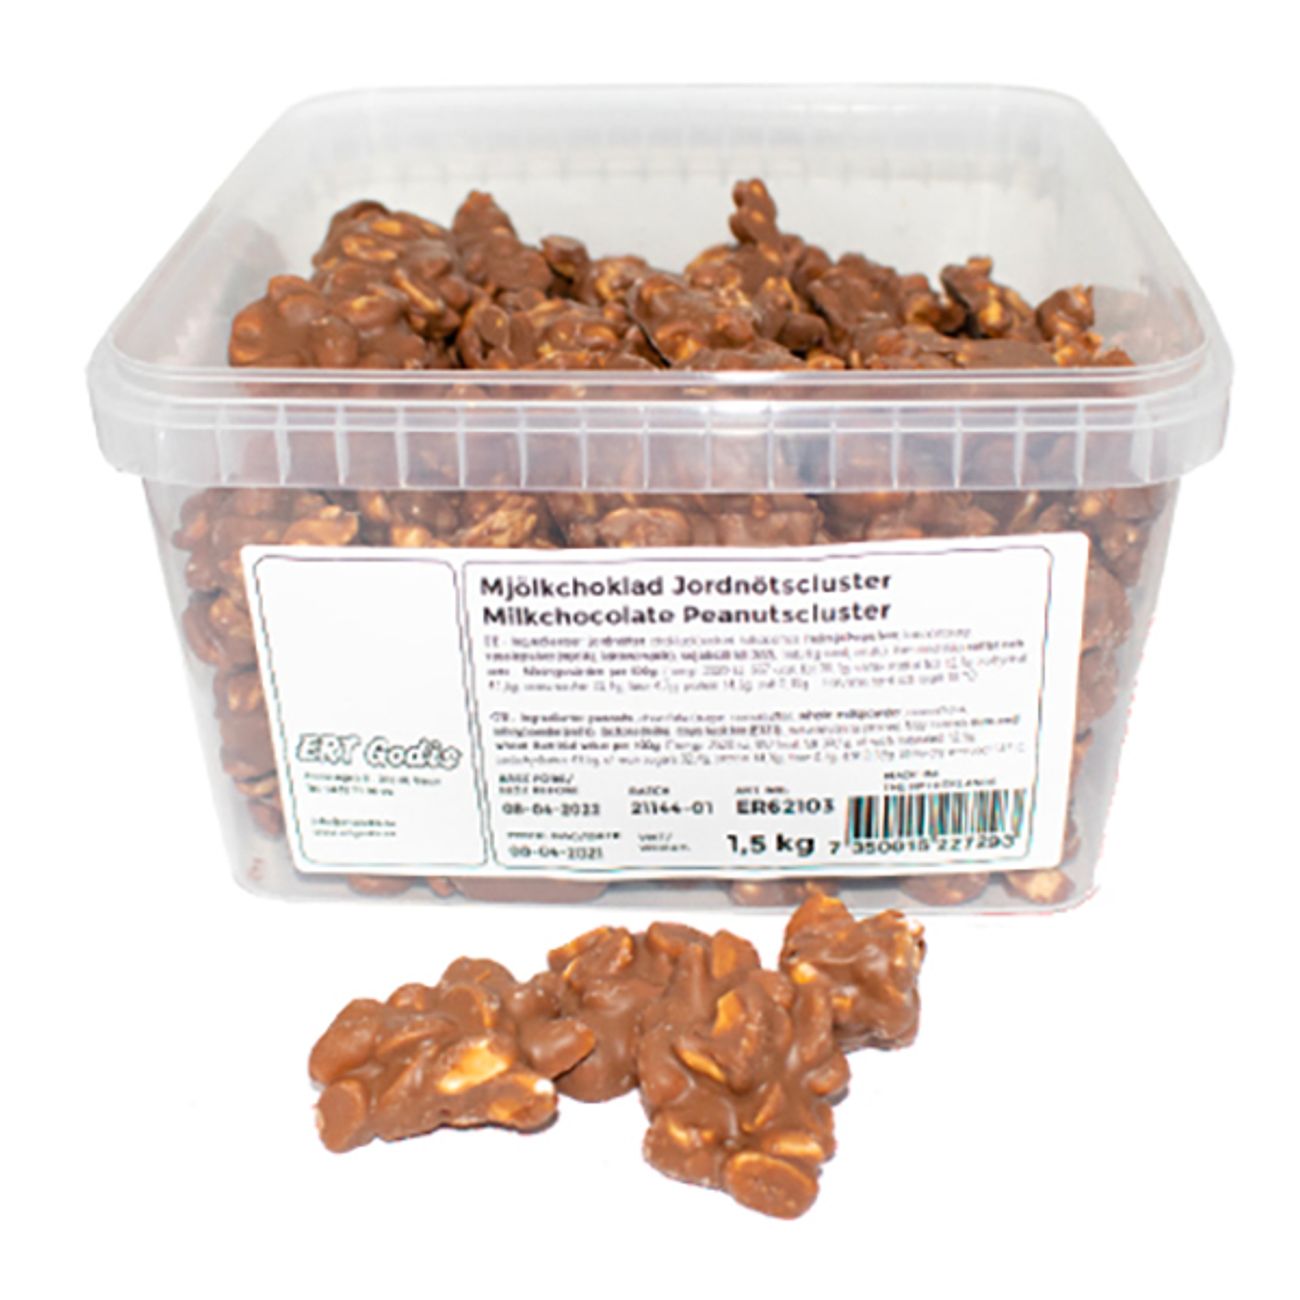 mjolkchoklad-jordnotscluster-storpack-77330-1